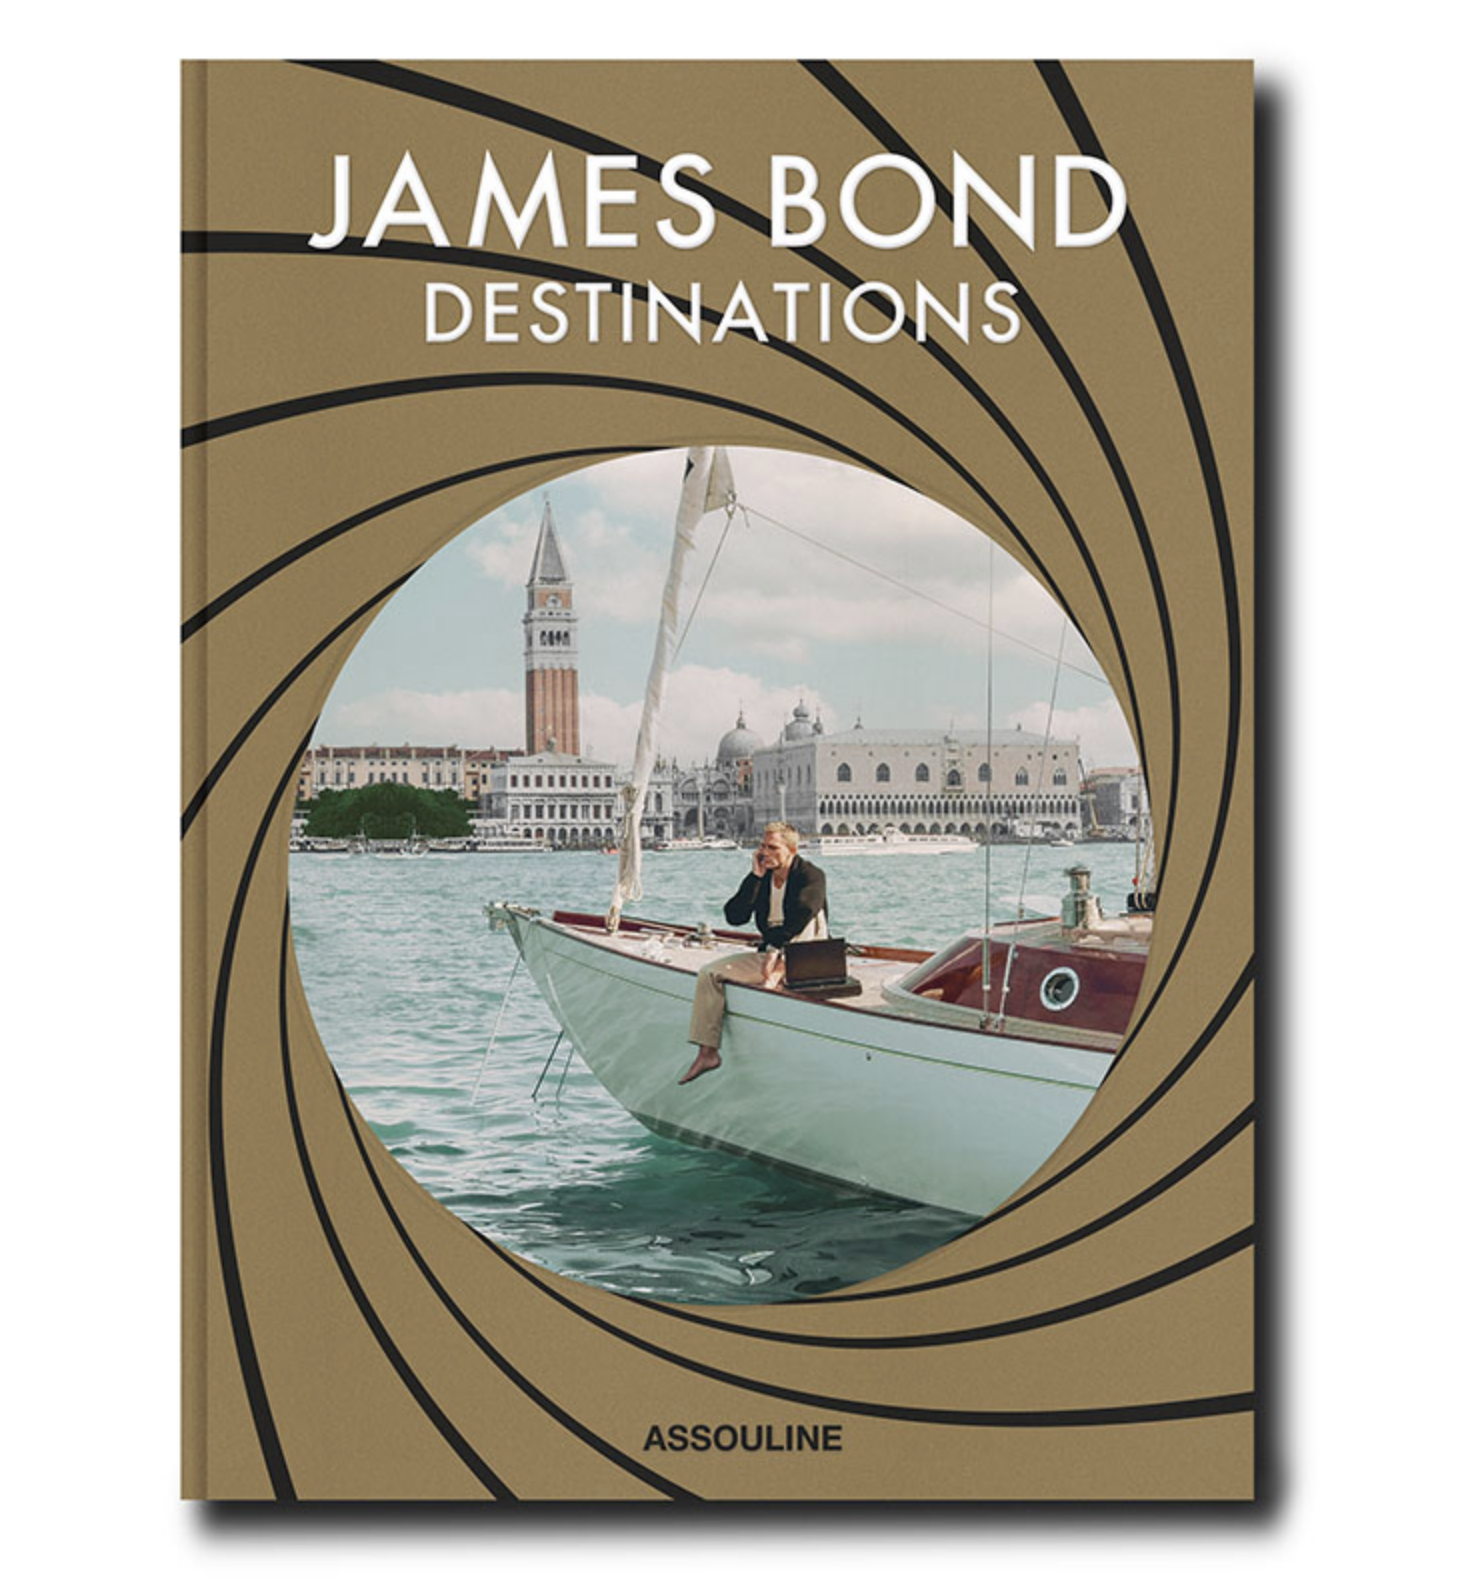 WILDENBERG Life-style - James Bond